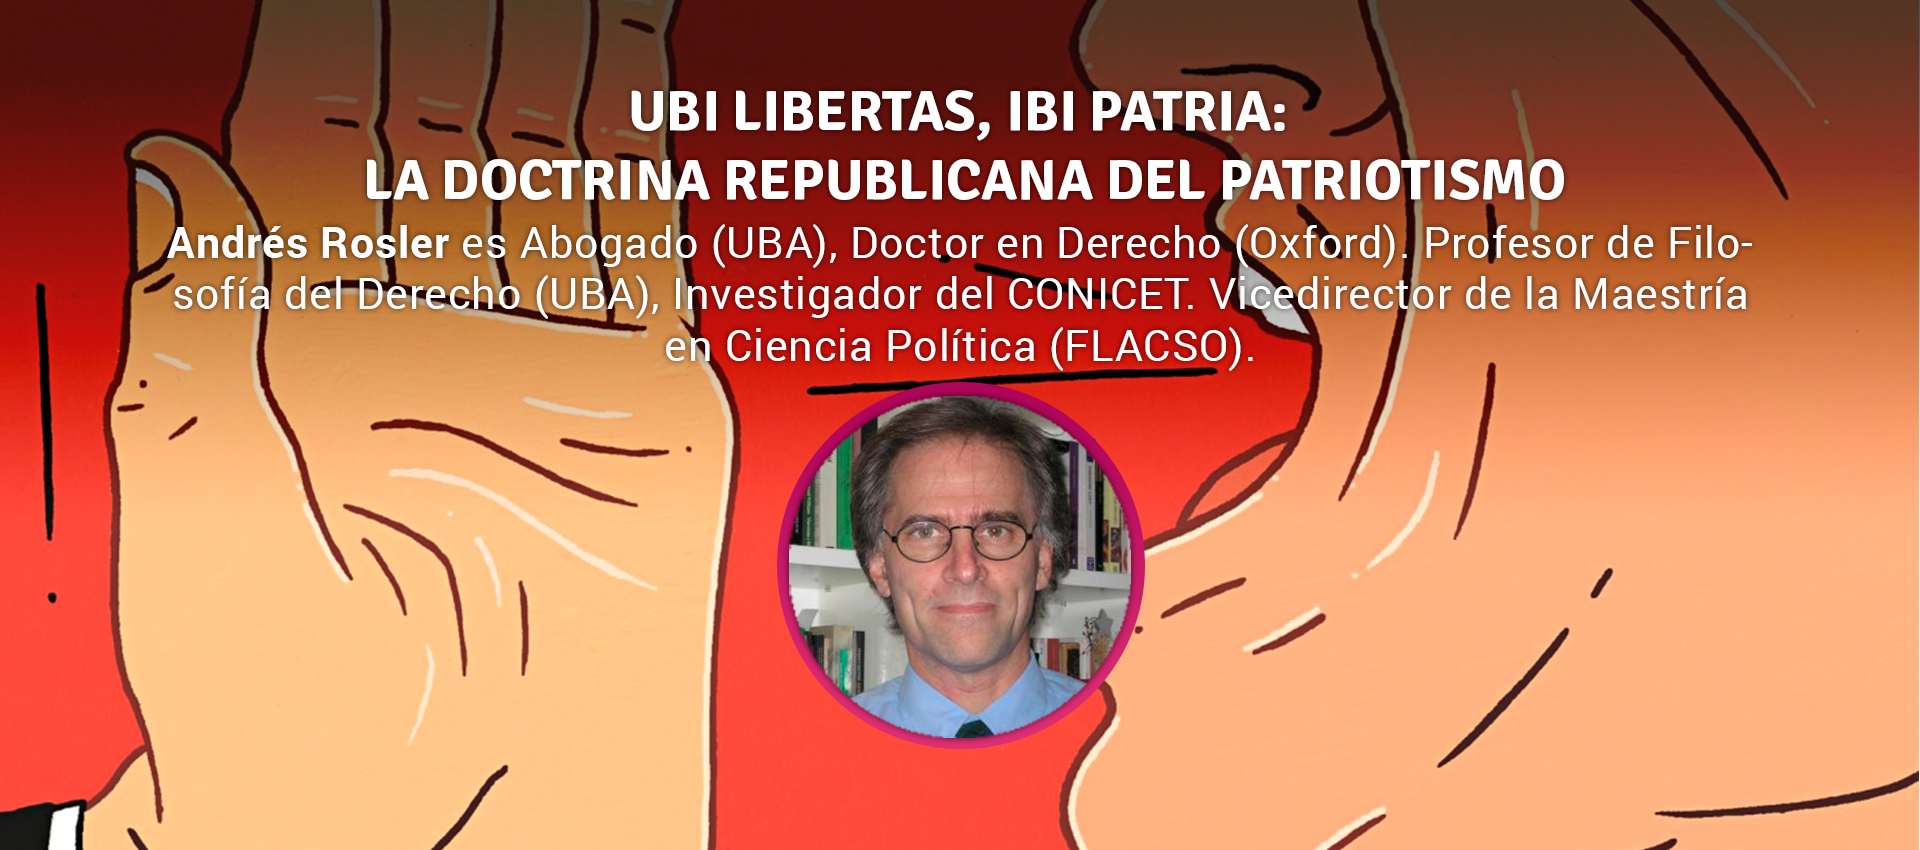 Andres Rosler - UBI LIBERTAS, IBI PATRIA: LA DOCTRINA REPUBLICANA DEL PATRIOTISMO